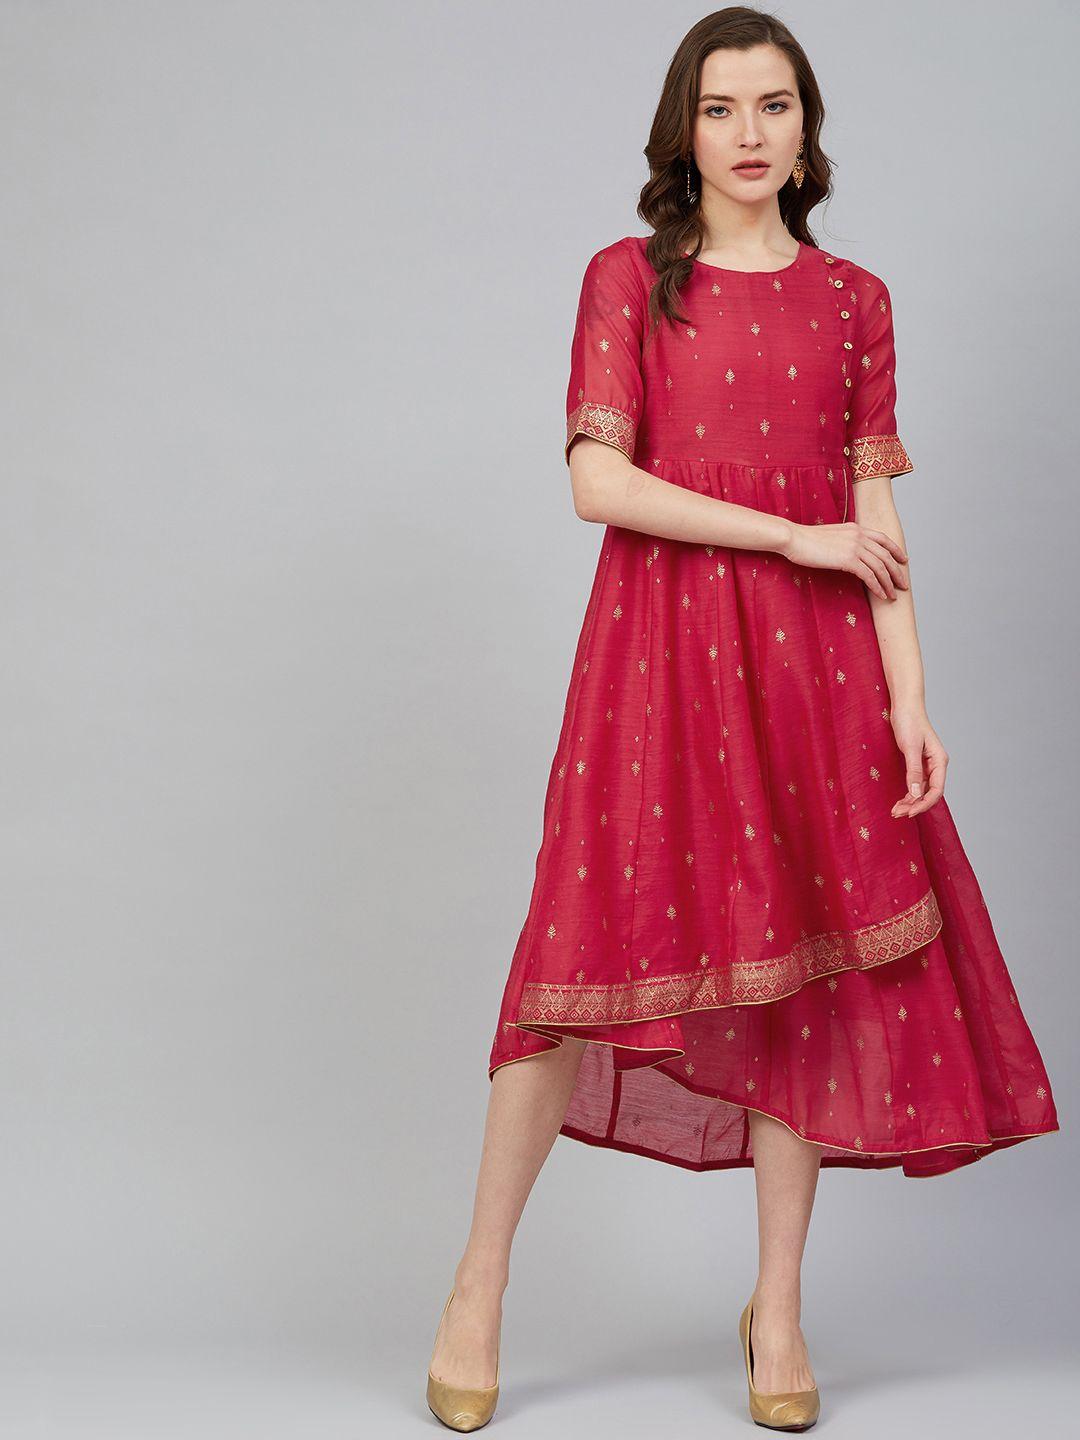 rangriti women pink & golden printed layered a-line dress